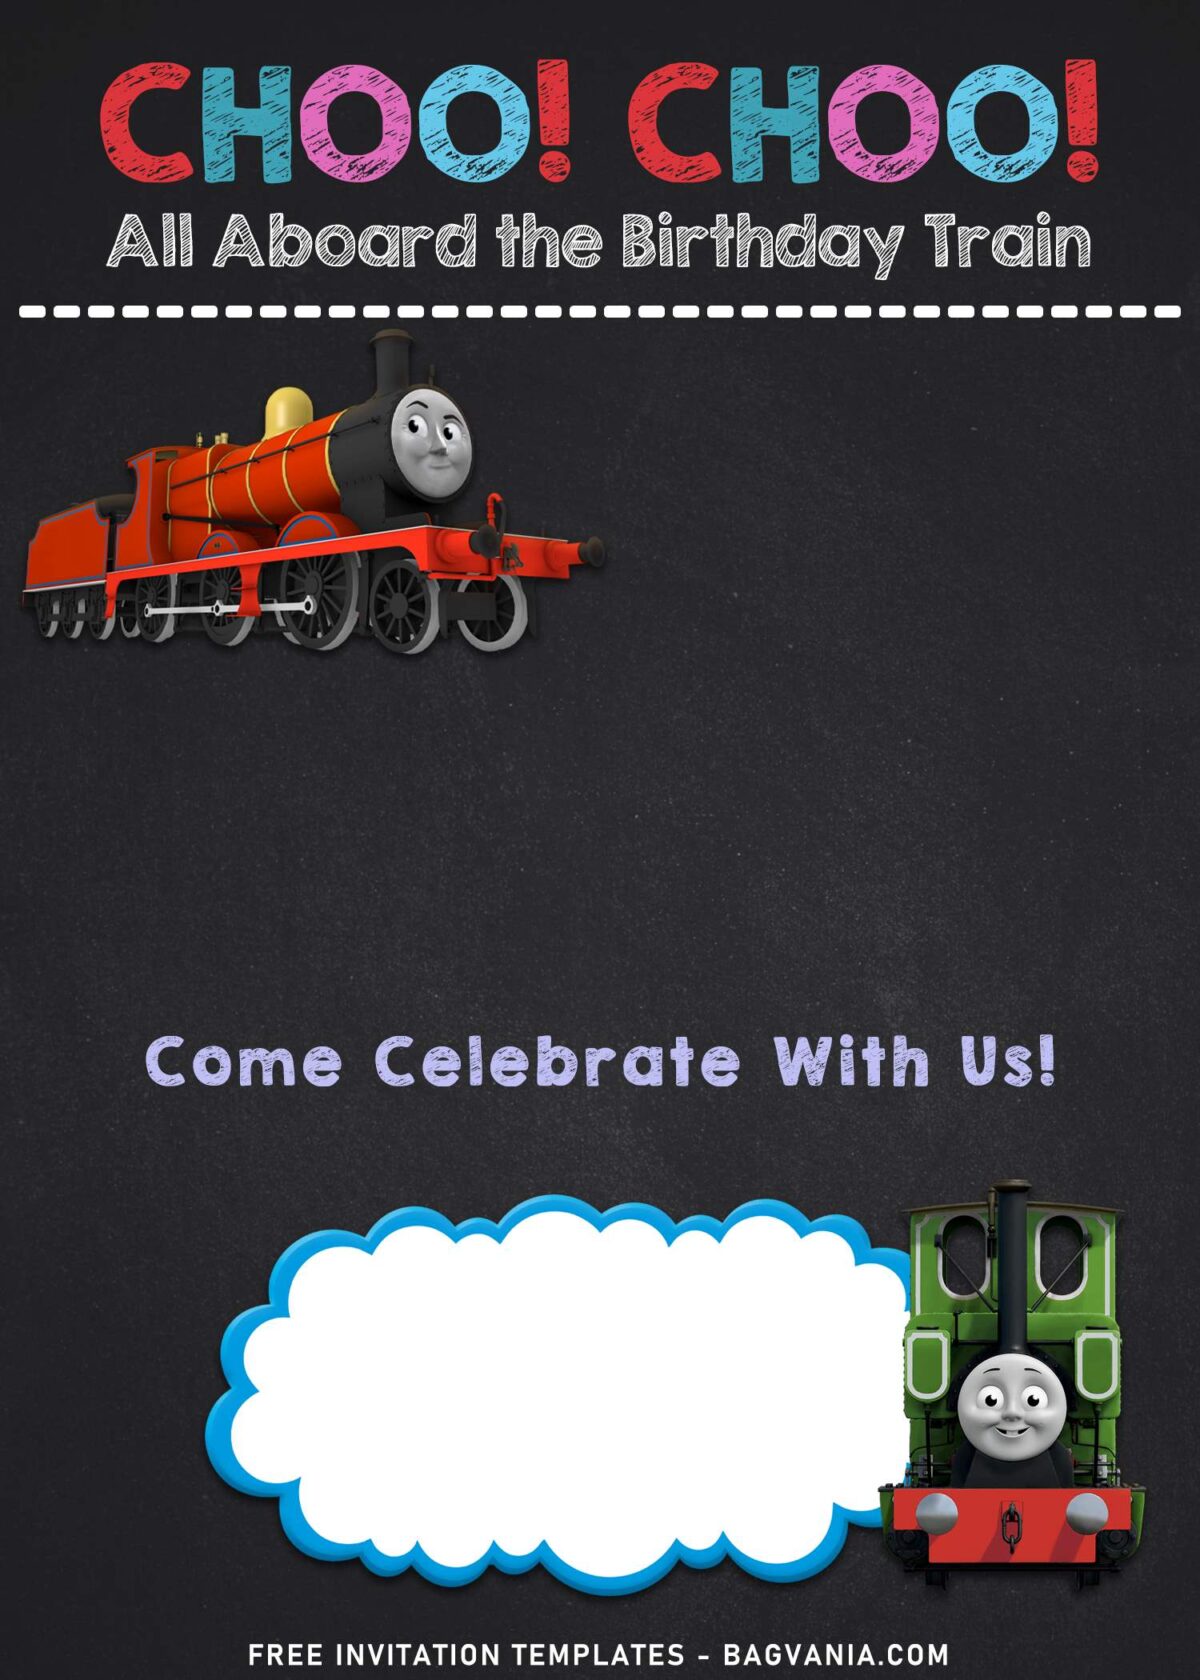 10+ Cartoon Chalkboard Thomas And Friends Birthday Invitation Templates with chalkboard or blackboard background